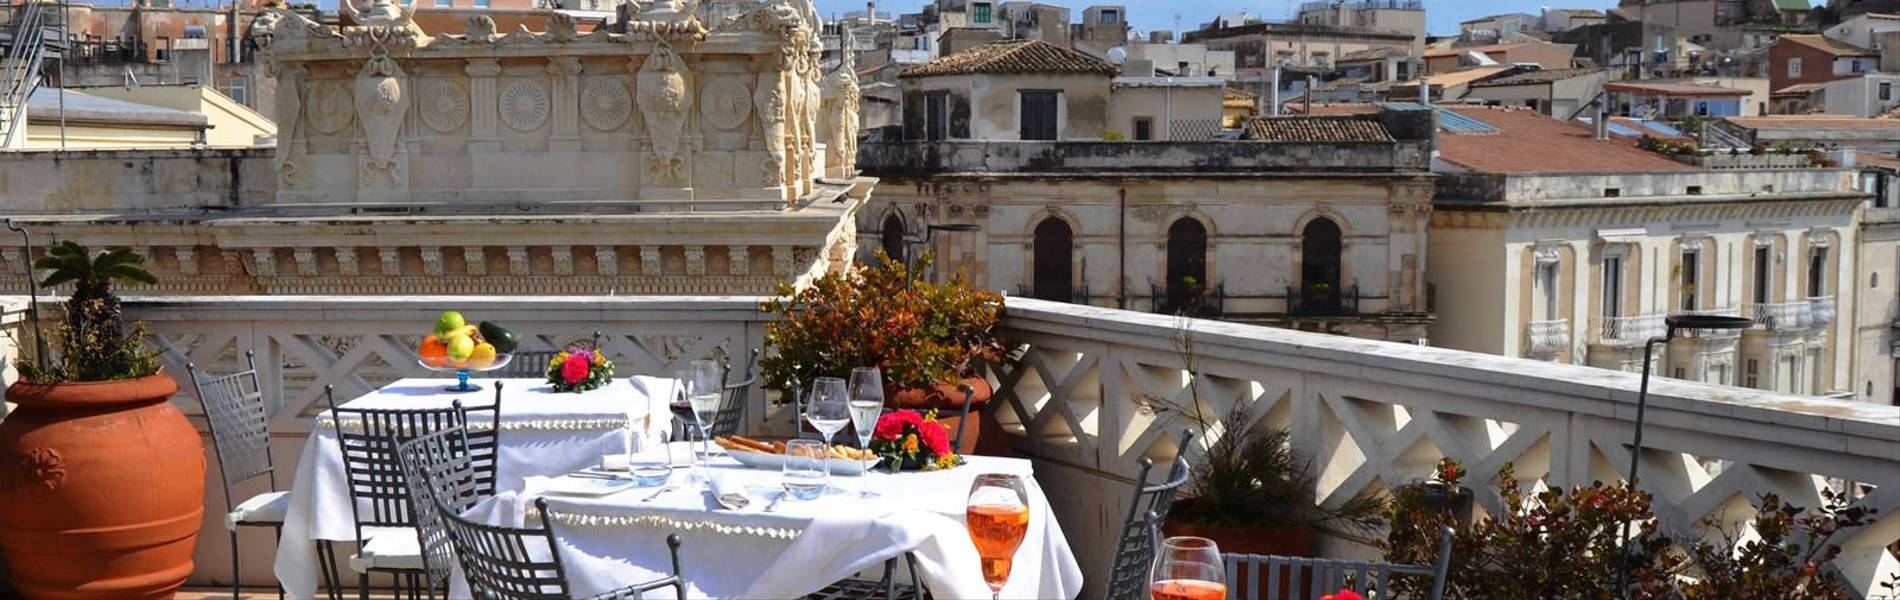 Grand Hotel Ortigia, Sicily, Italy (15).jpg